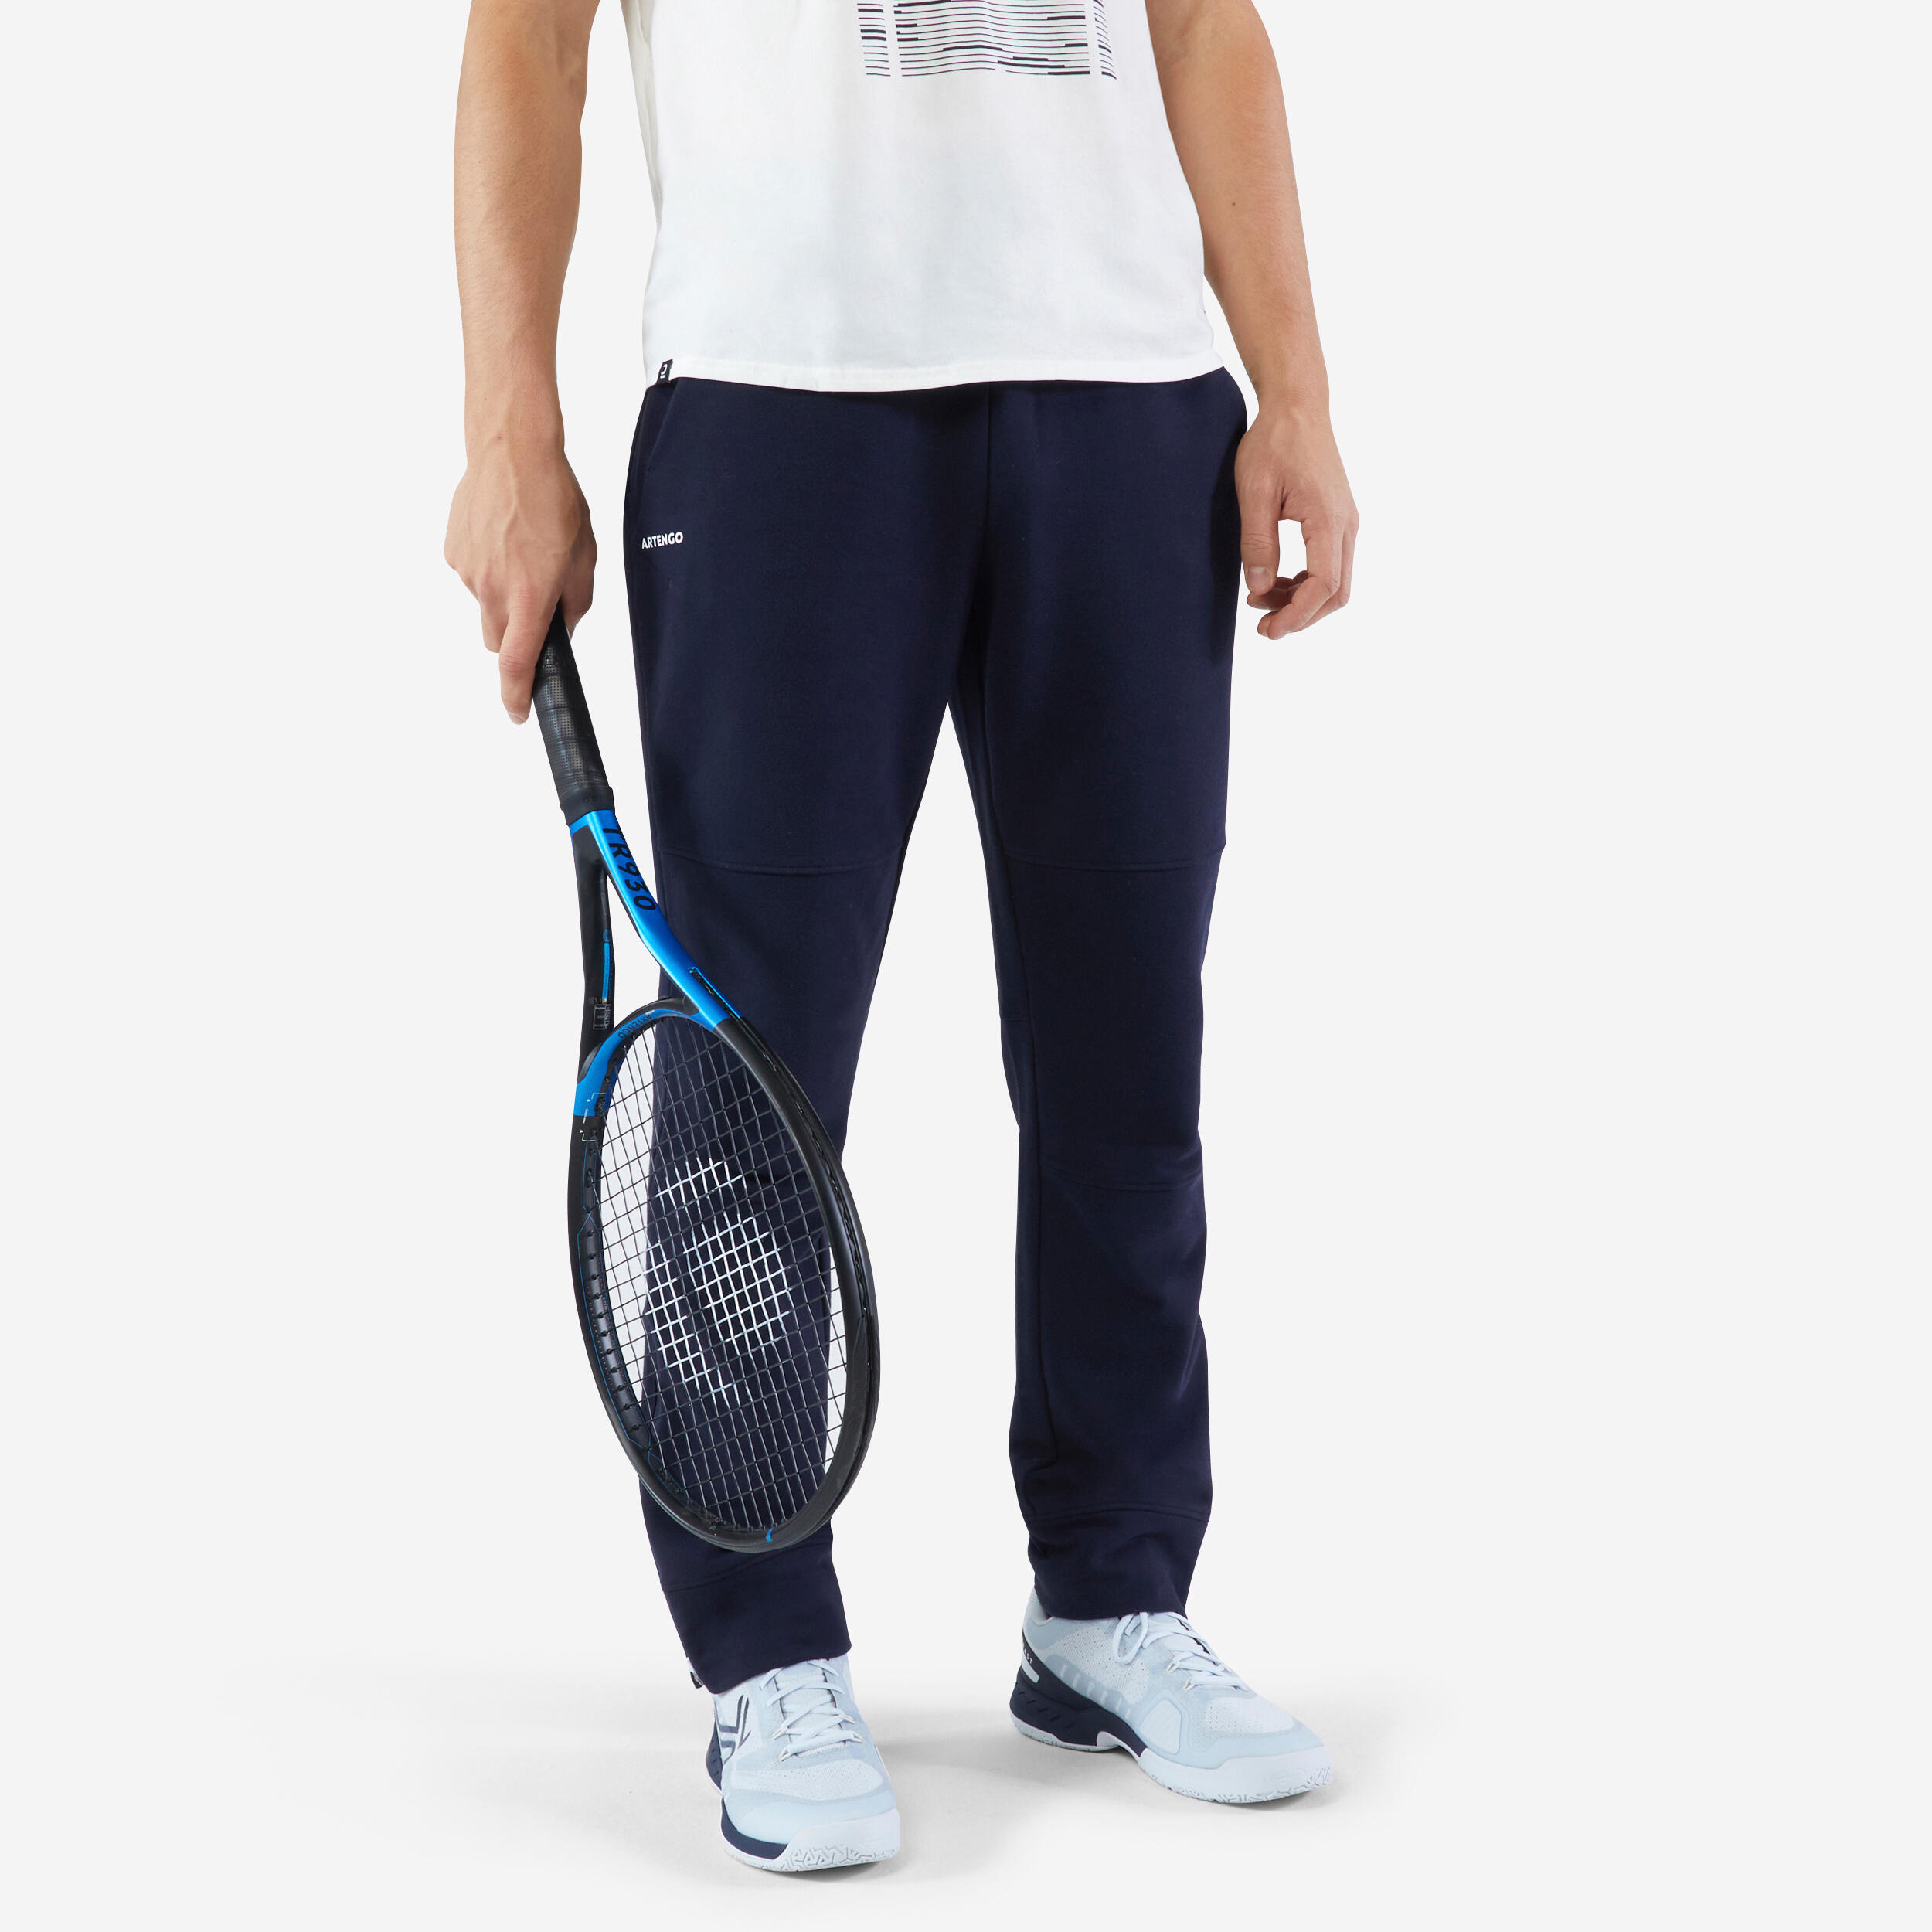 pantalon de tennis homme - soft marine - artengo